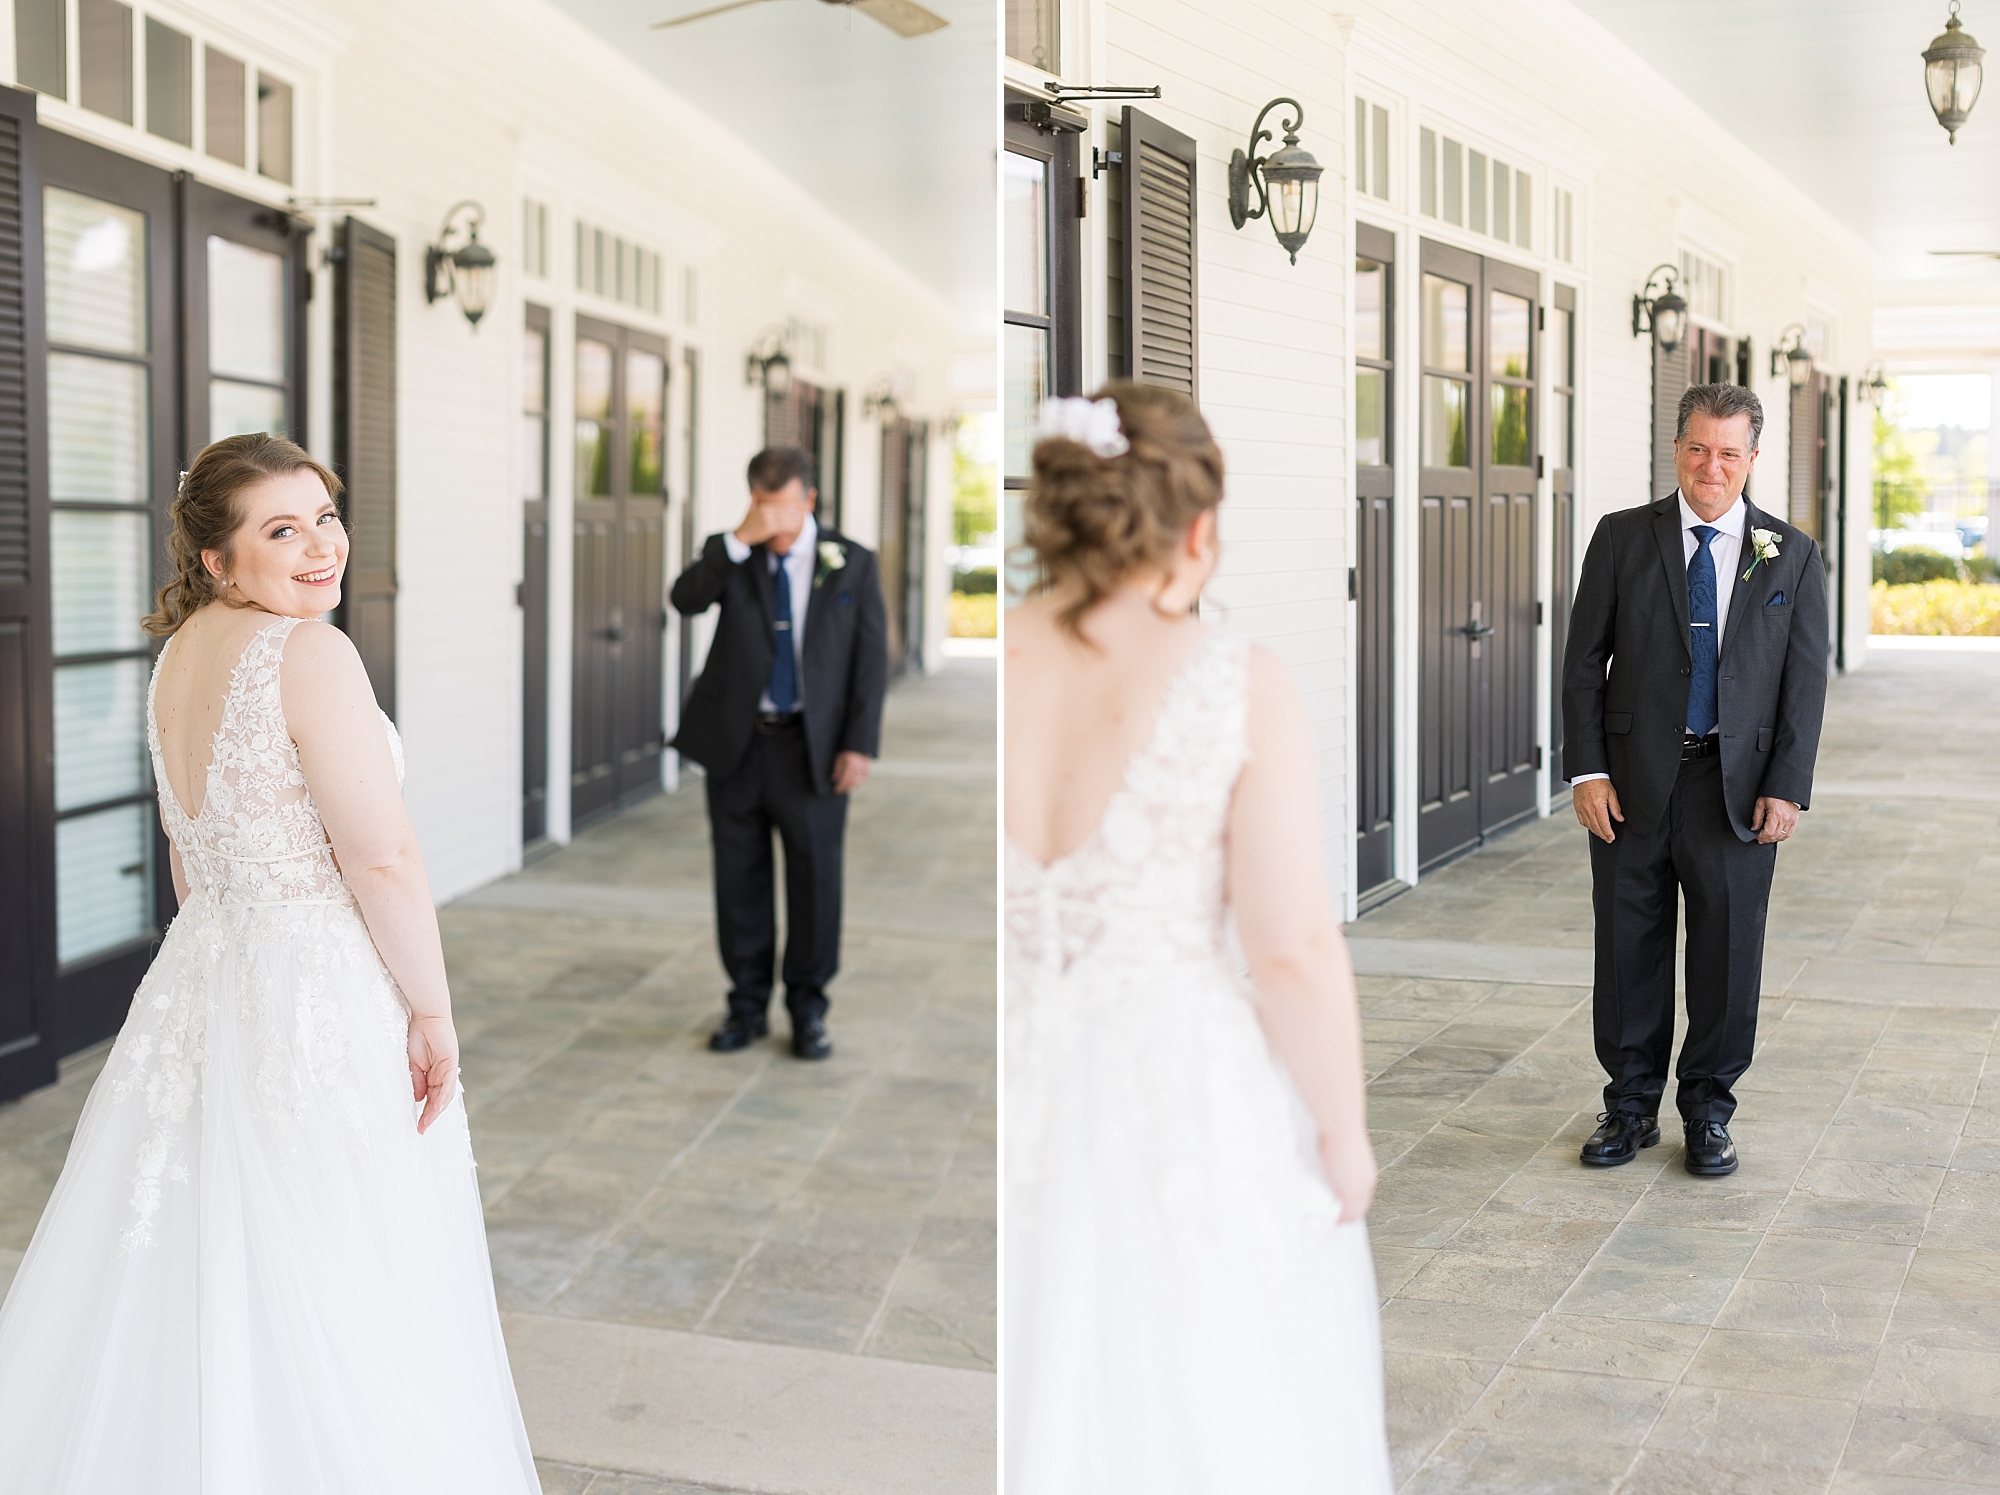 First look with father - Raleigh NC Wedding Photographer - Sarah Hinckley Photography